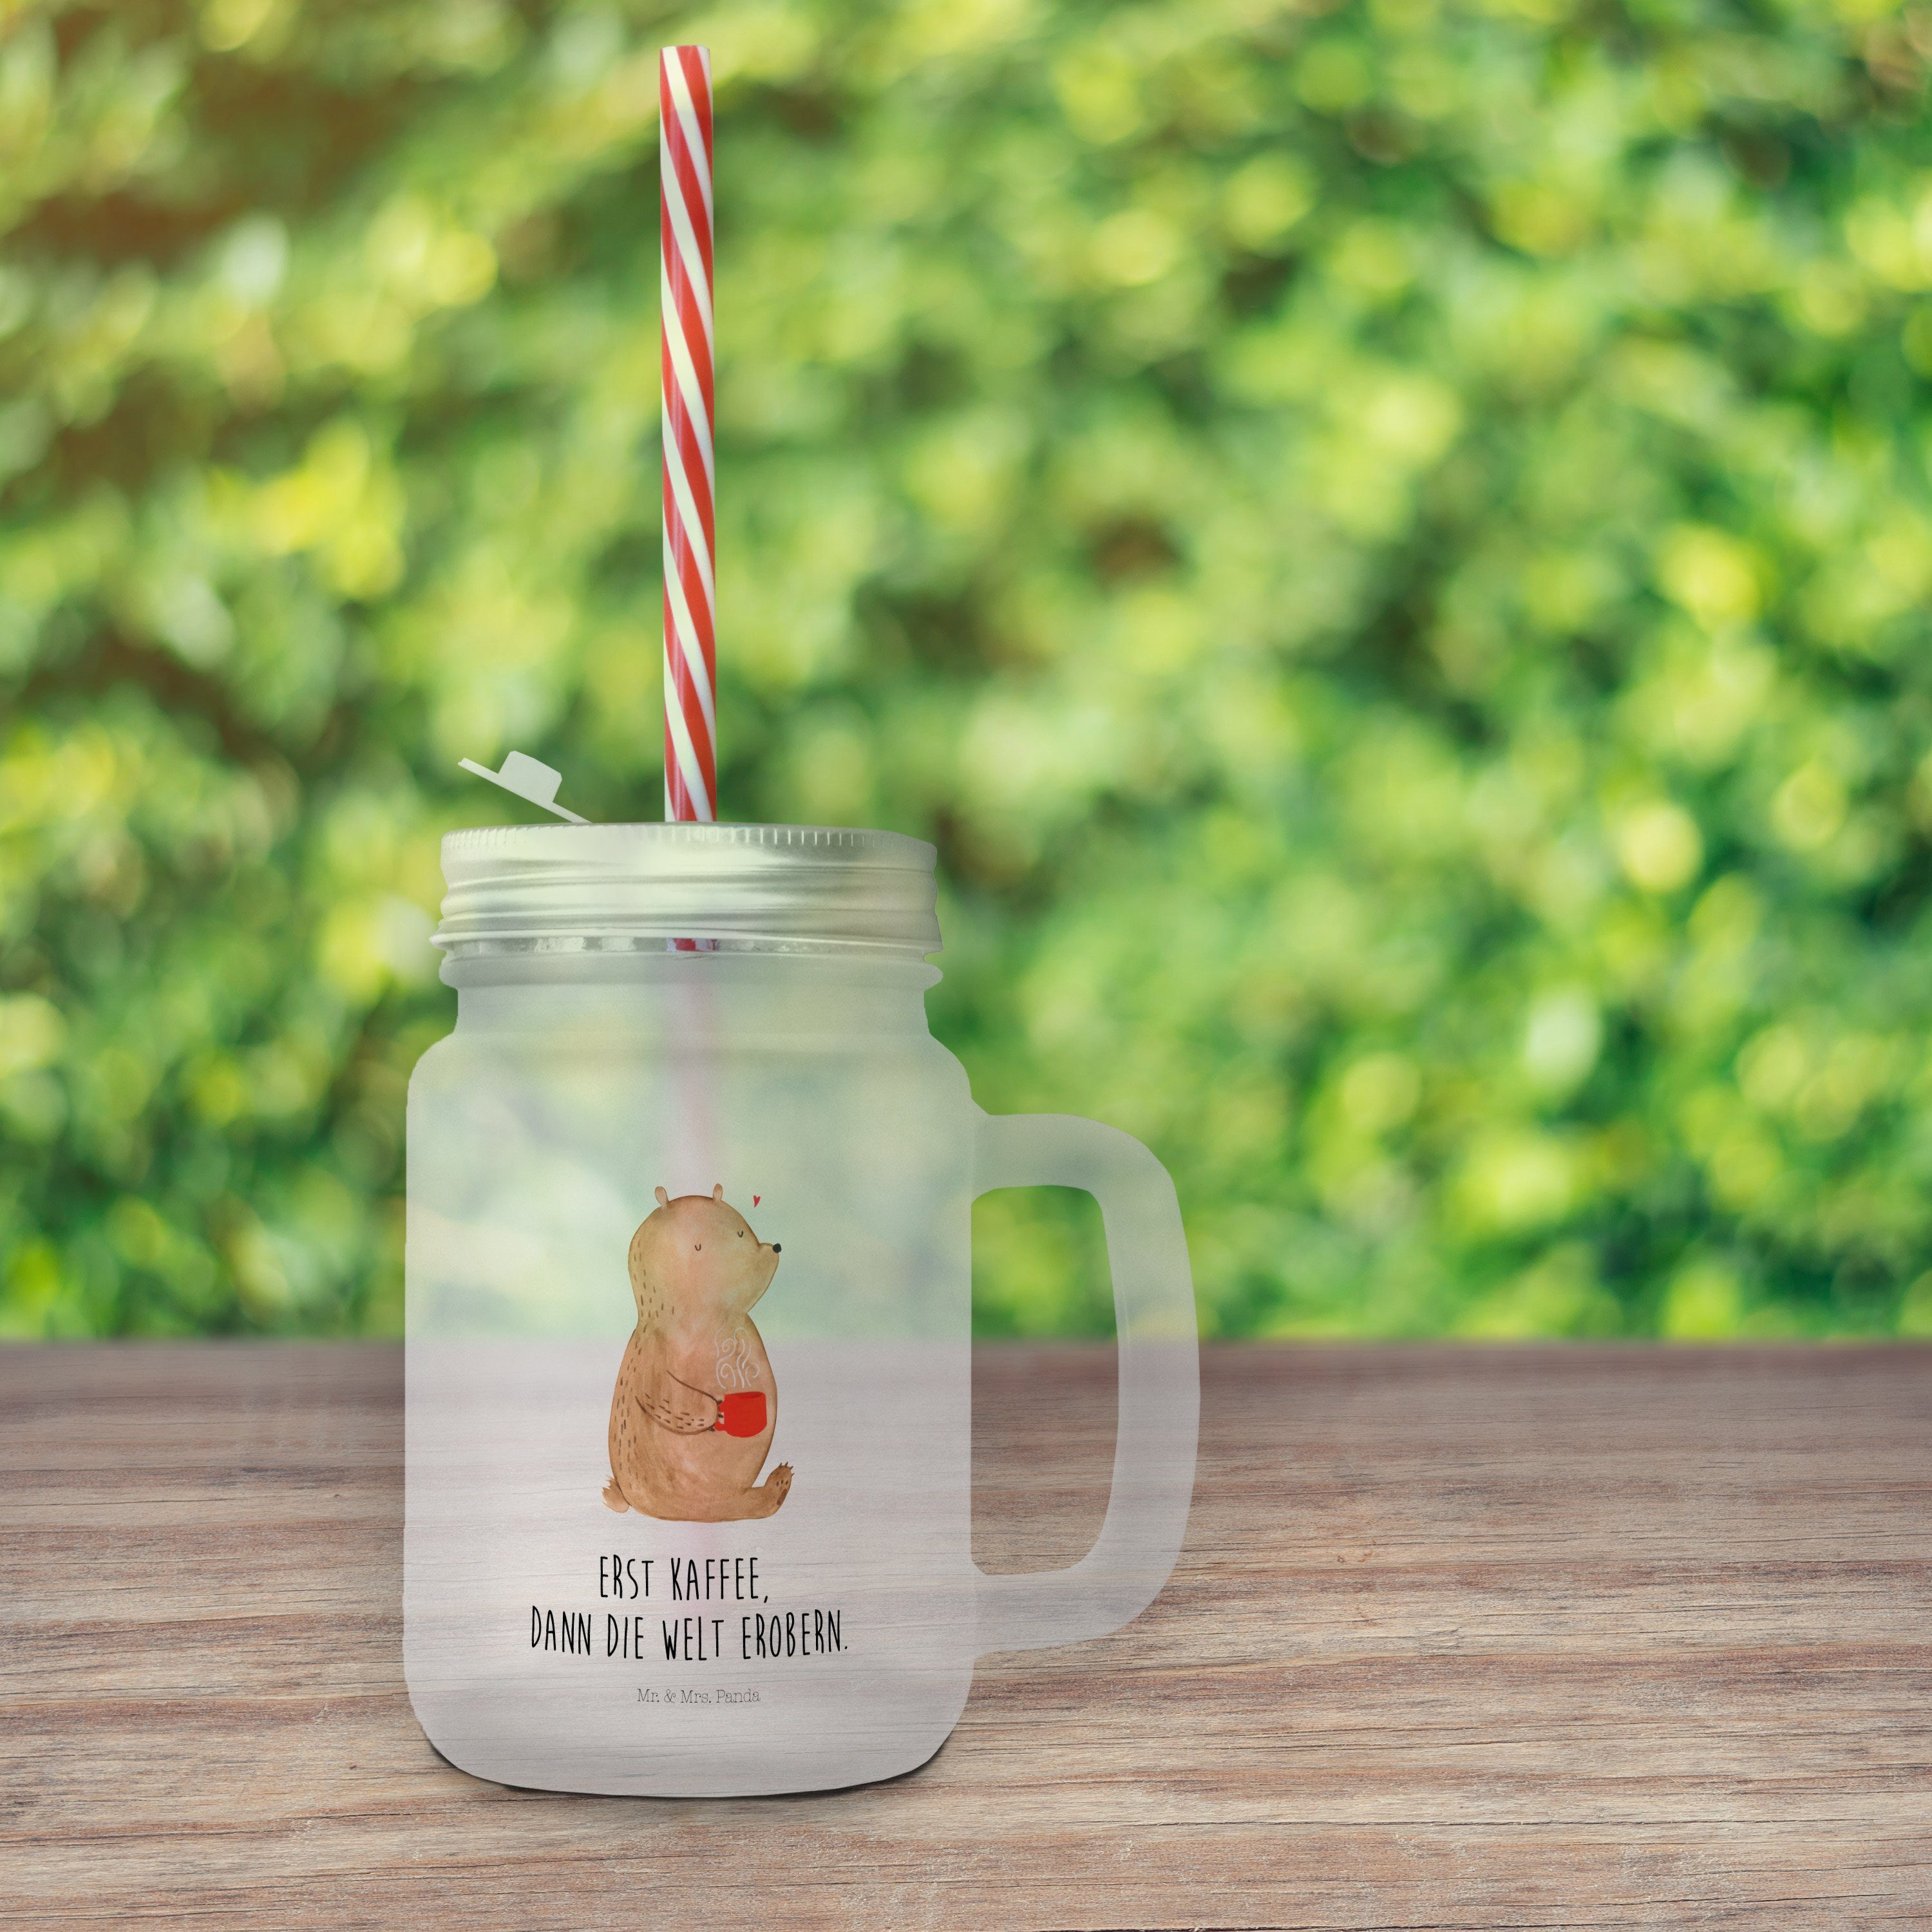 Welt Kaffee Glas Premium Transparent - Panda Bär & Teddy, Mr. Mrs. Glas erobern, Trinkglas, - Geschenk,